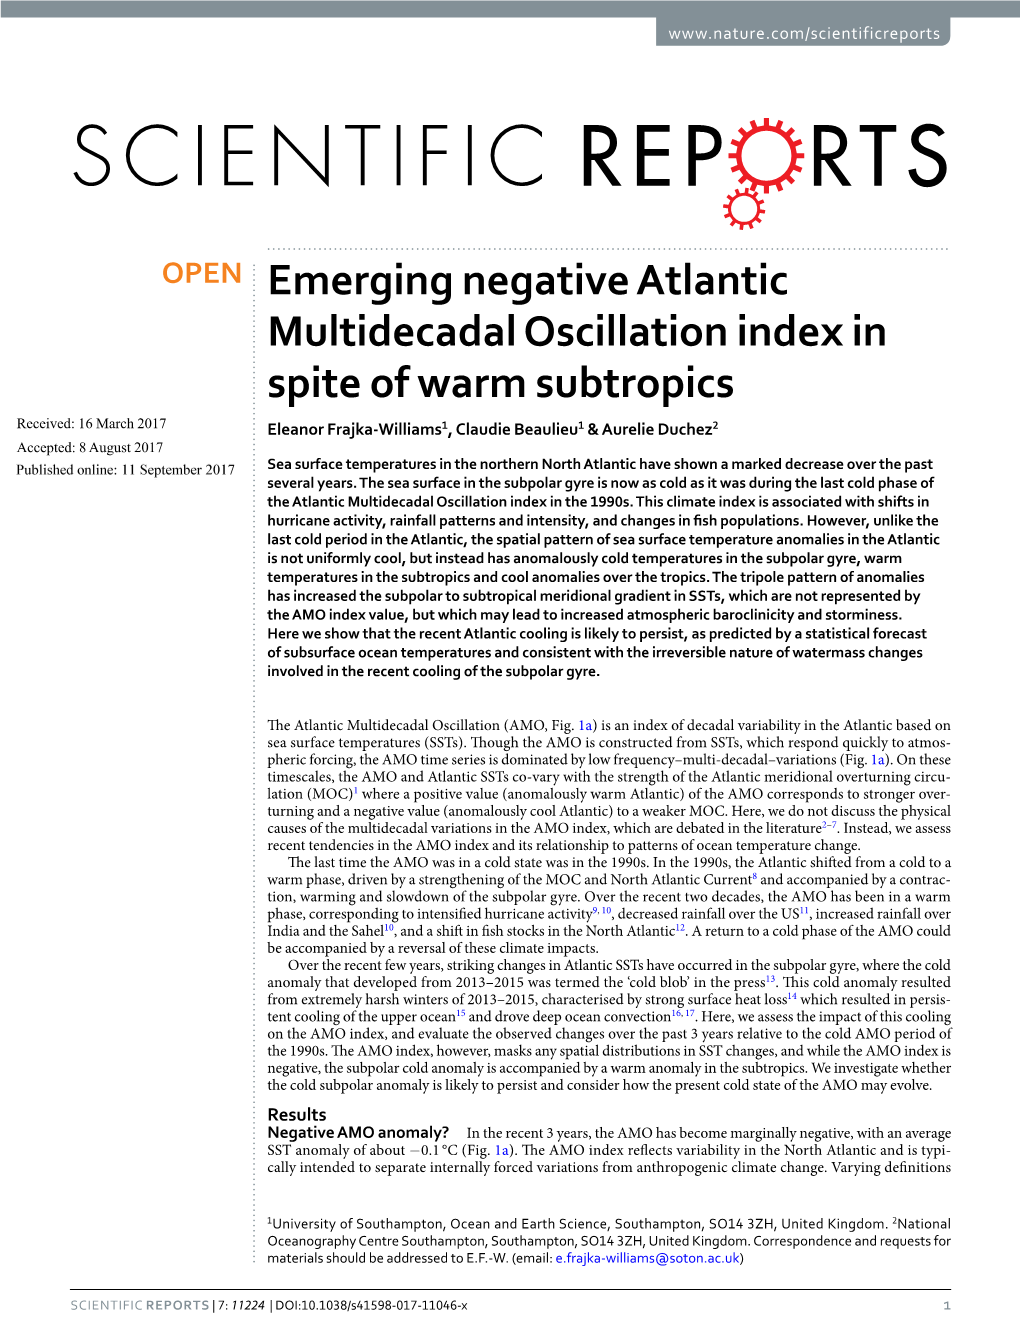 Emerging Negative Atlantic Multidecadal Oscillation Index In